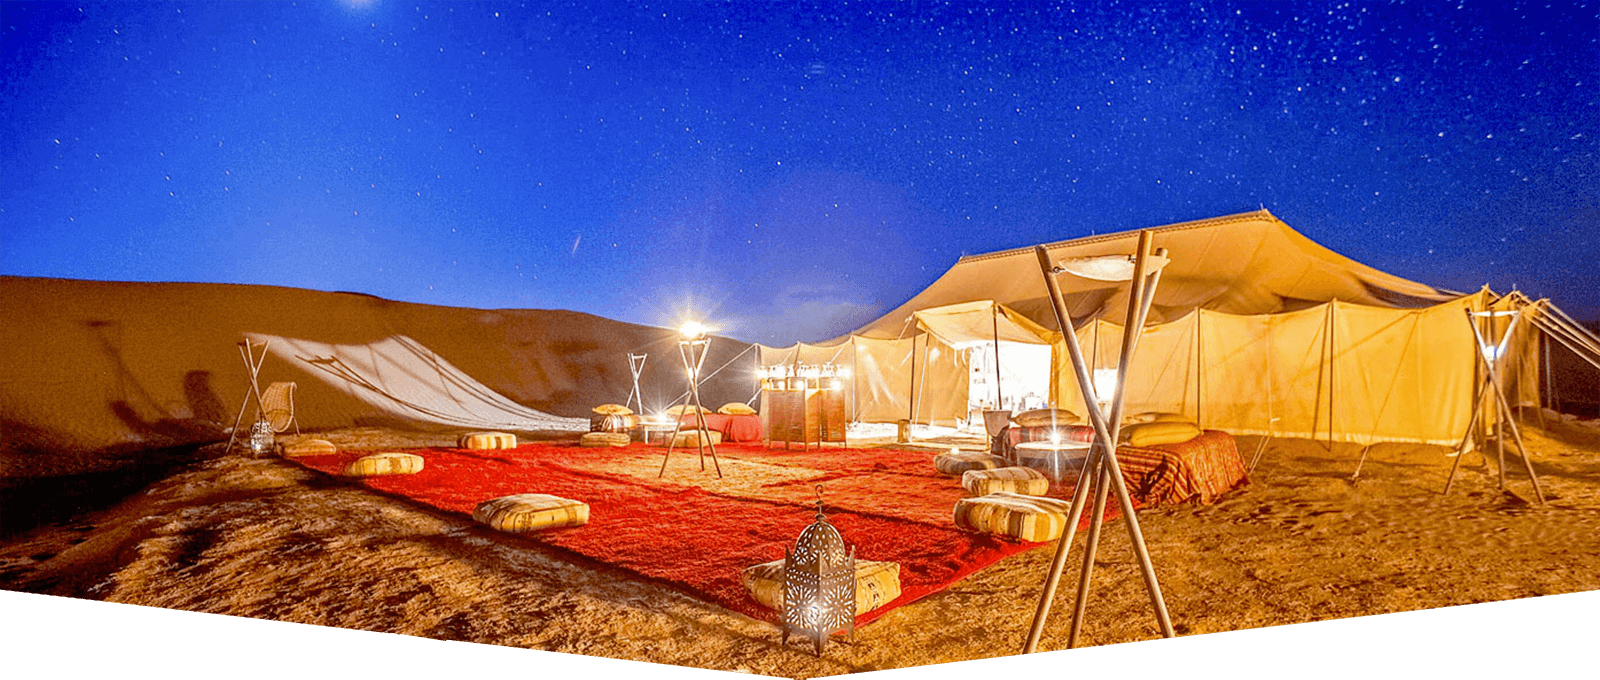 luxury desert camp in morocco